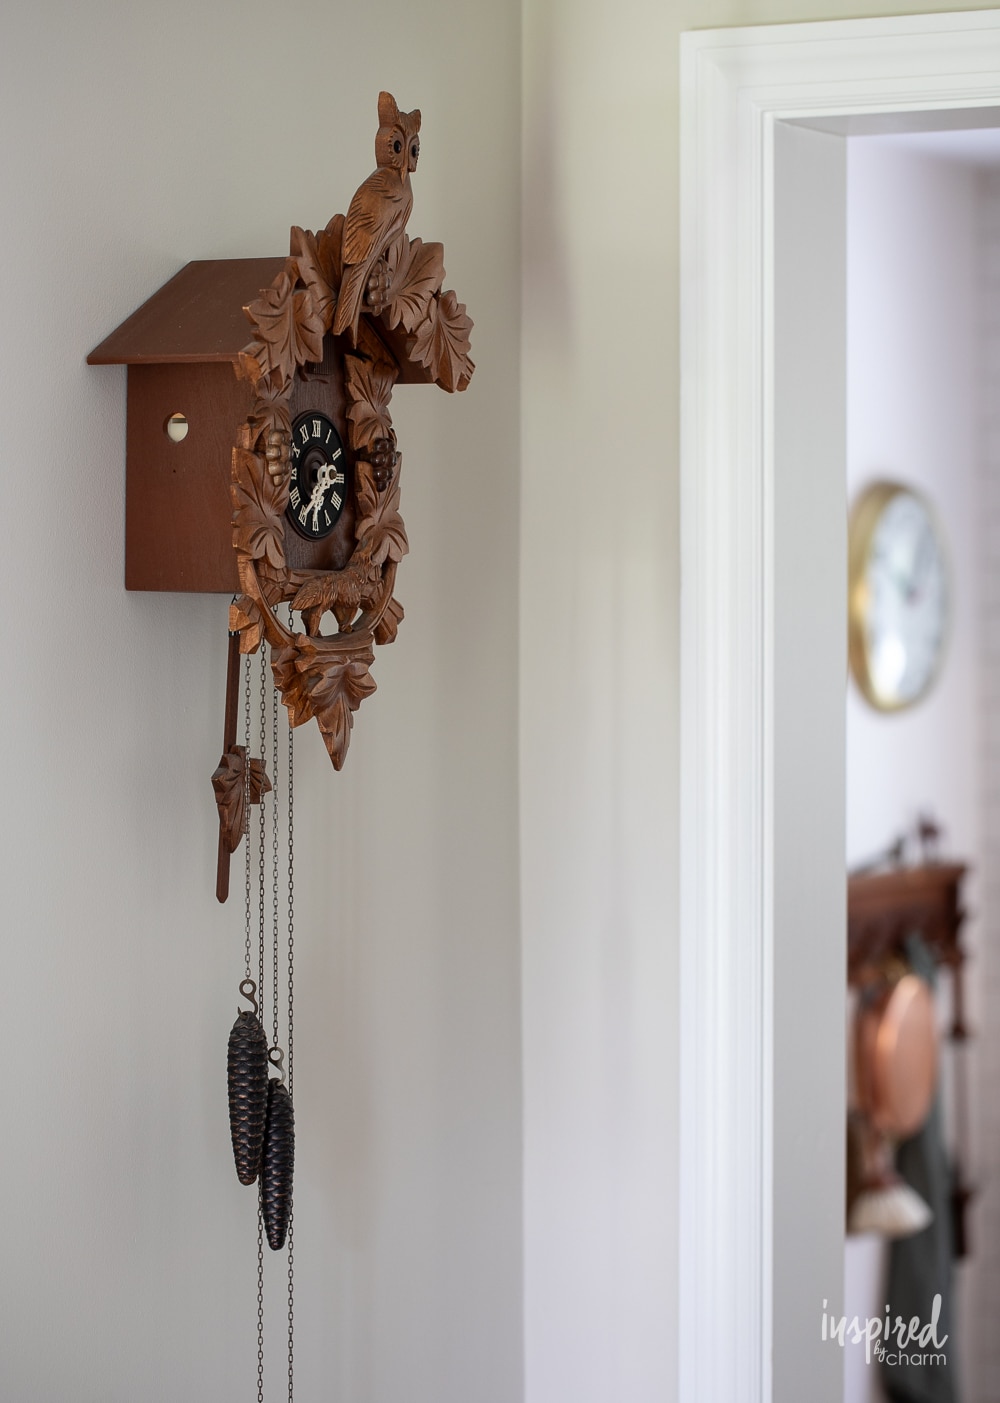 large cuckoo clock hung on the wall. 